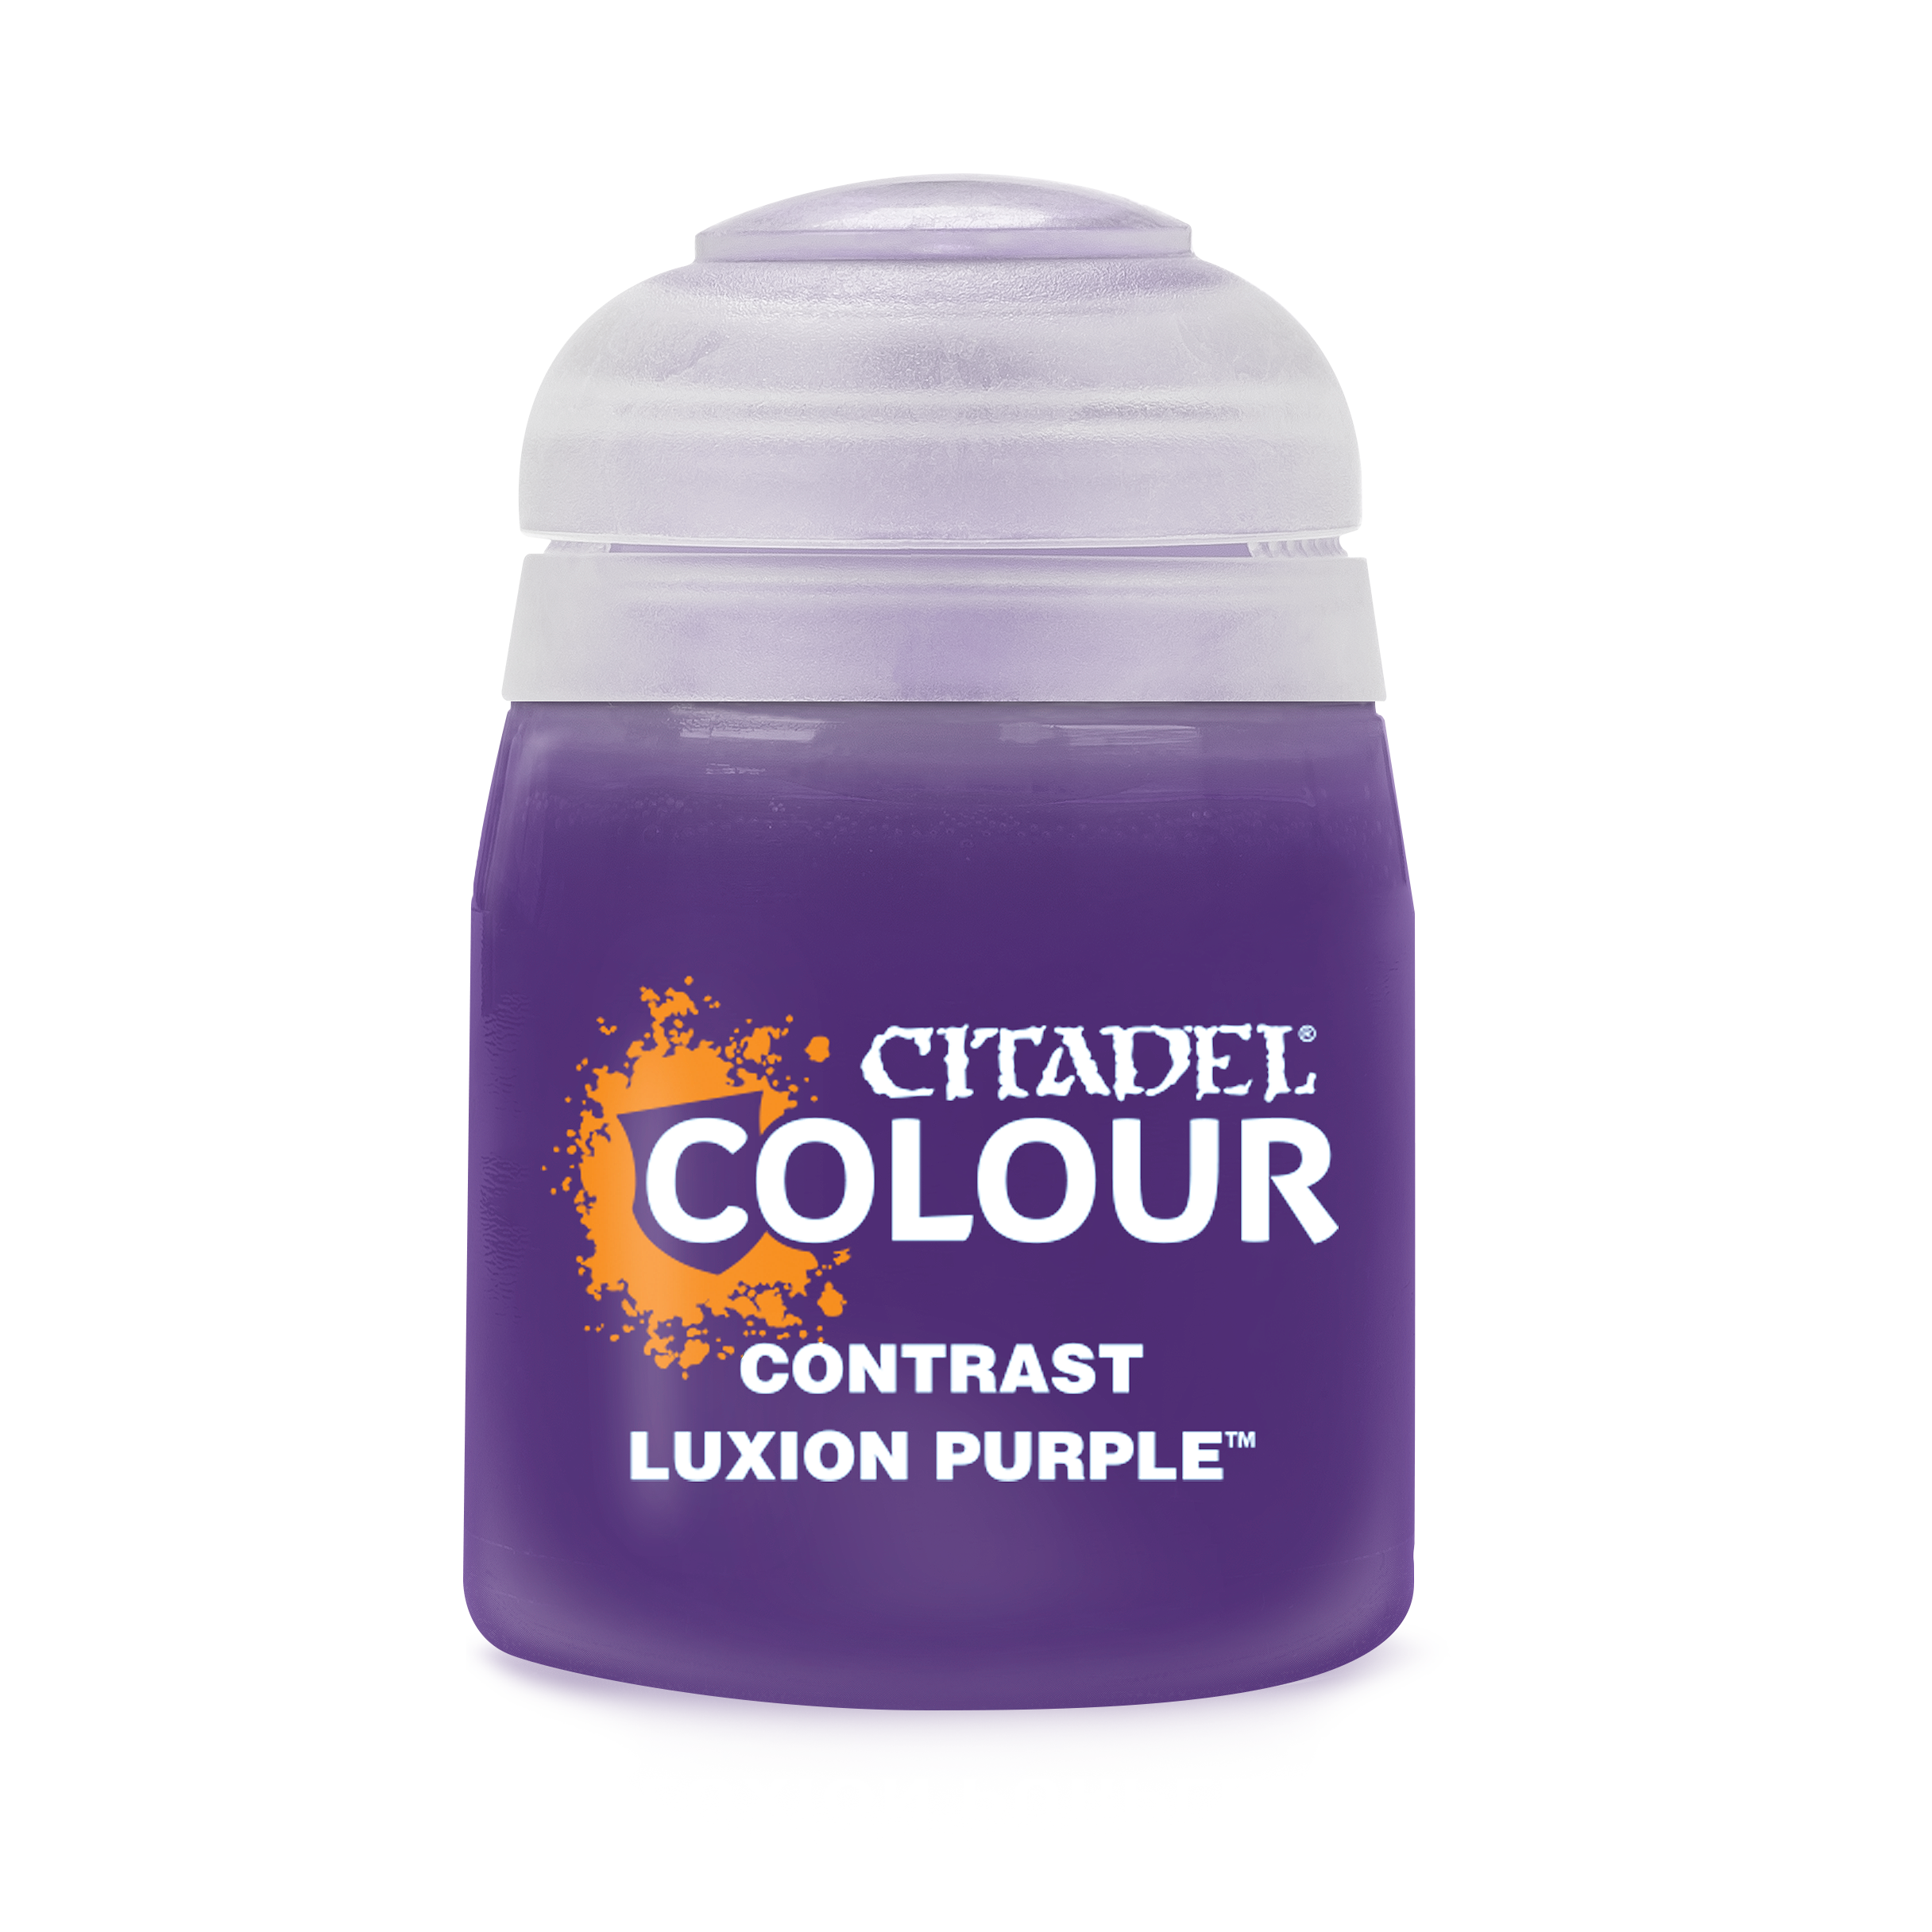 luxion purple